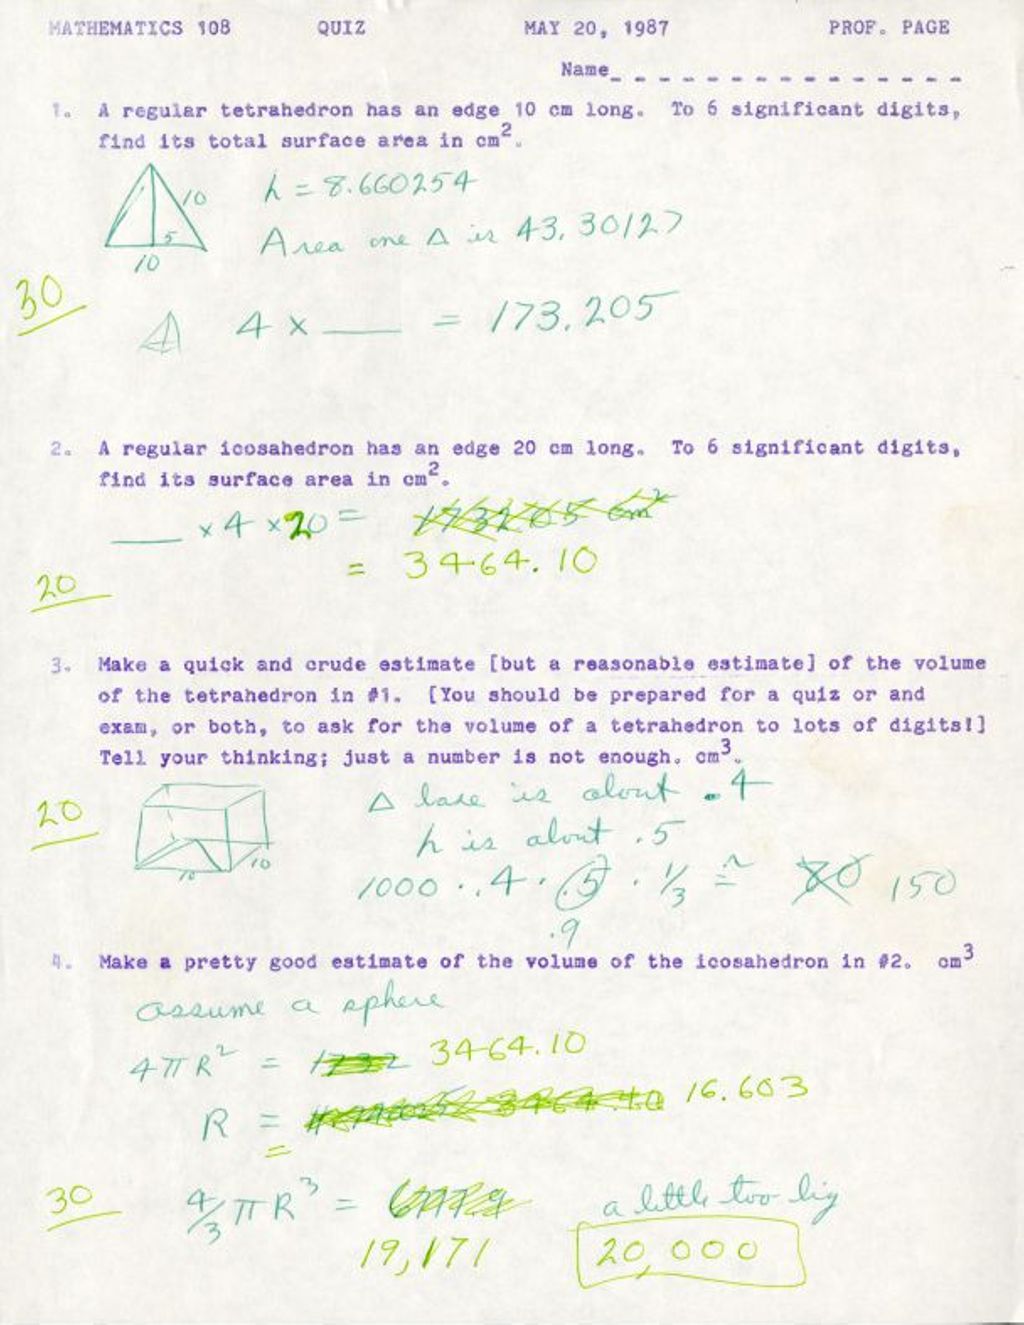 Math 108 Quiz (1987) A regular tetrahedron